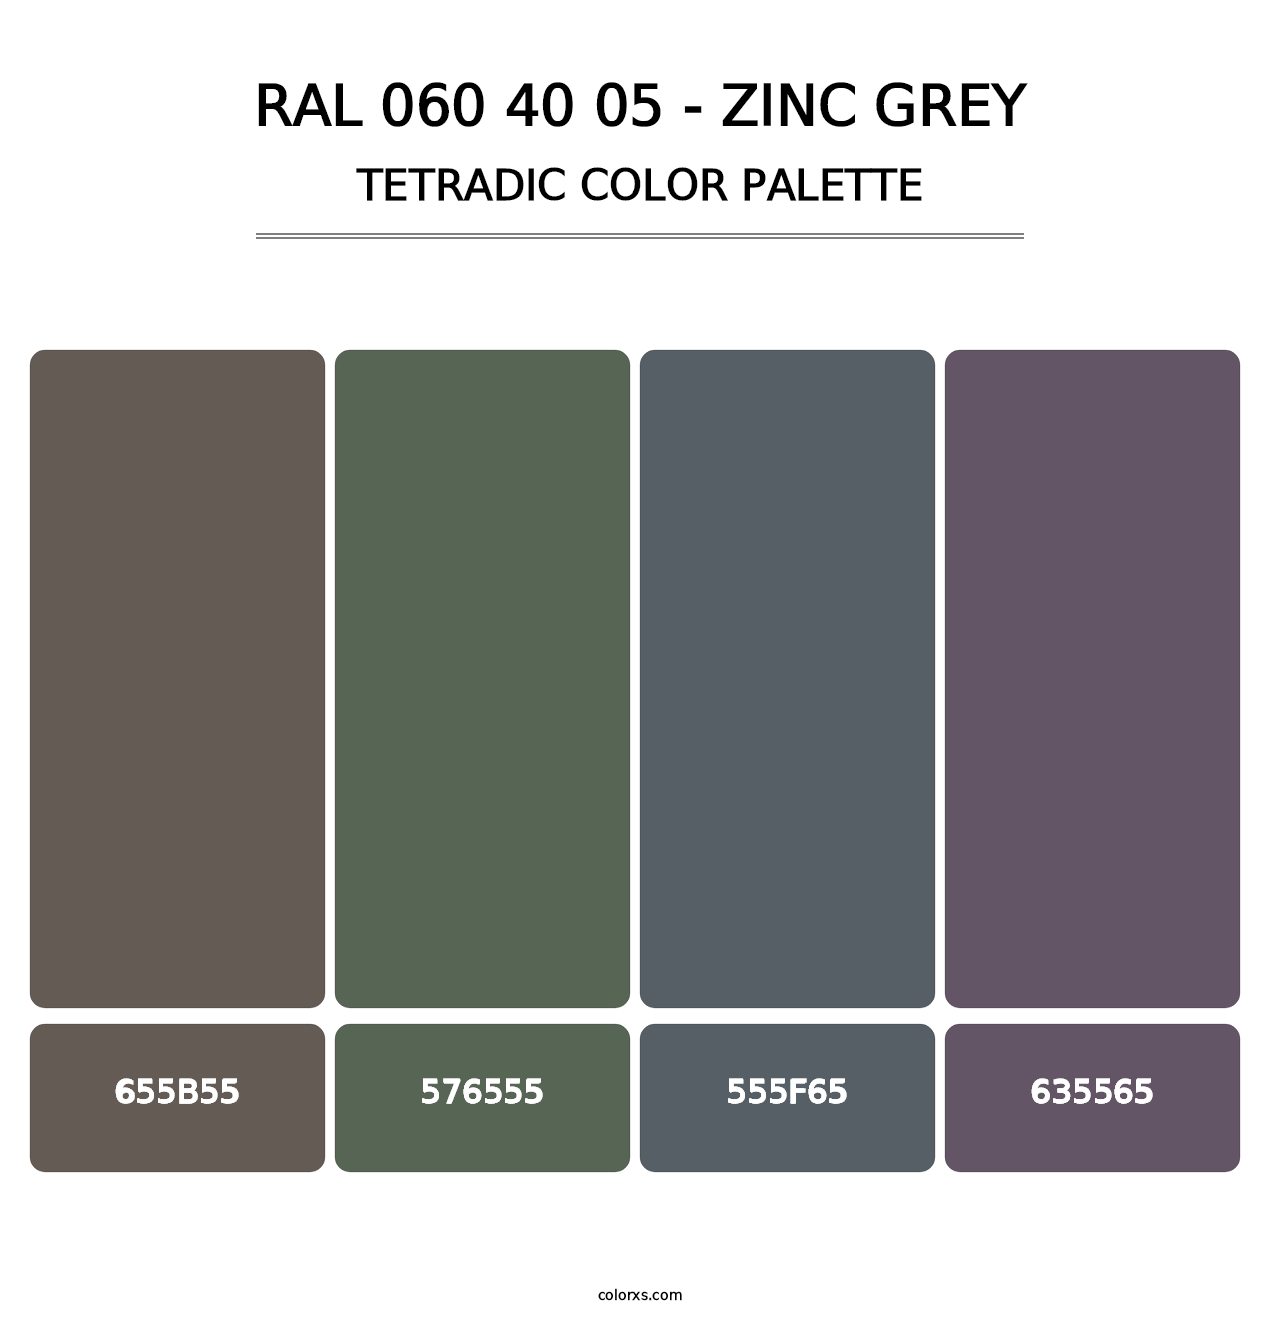 RAL 060 40 05 - Zinc Grey - Tetradic Color Palette